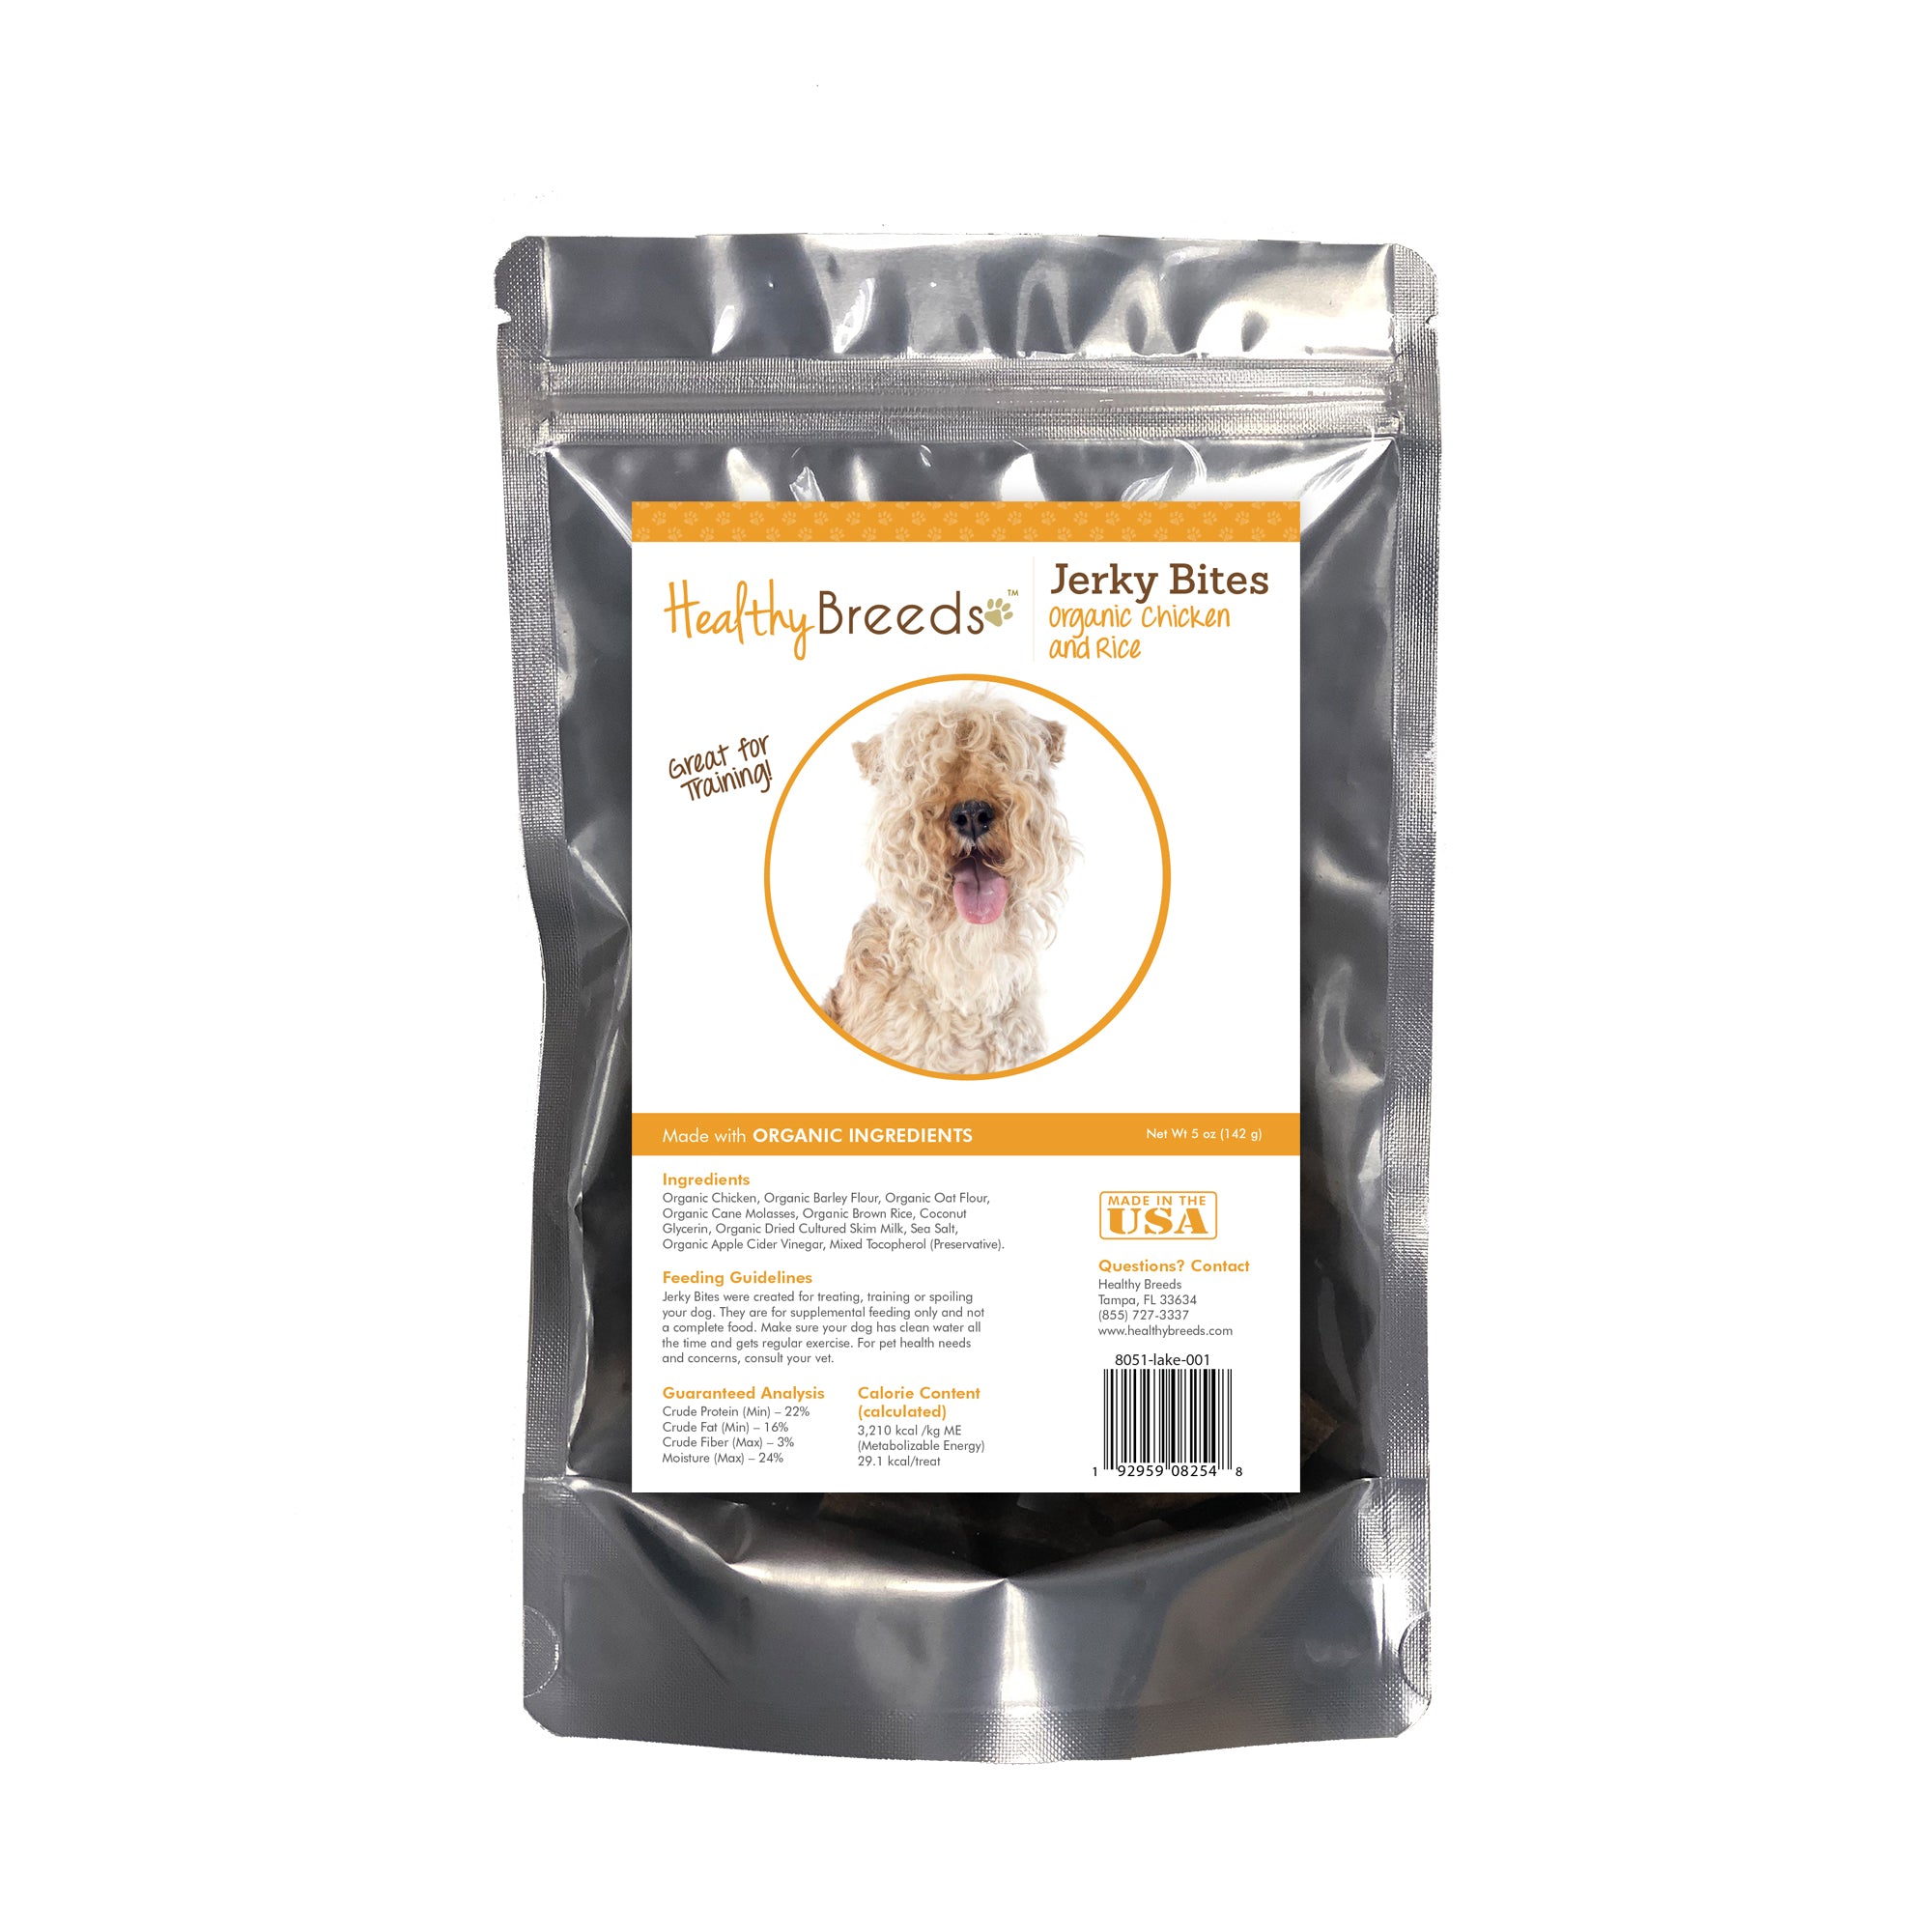 Lakeland Terrier Jerky Bites Chicken & Rice Recipe Dog Treats 5 oz